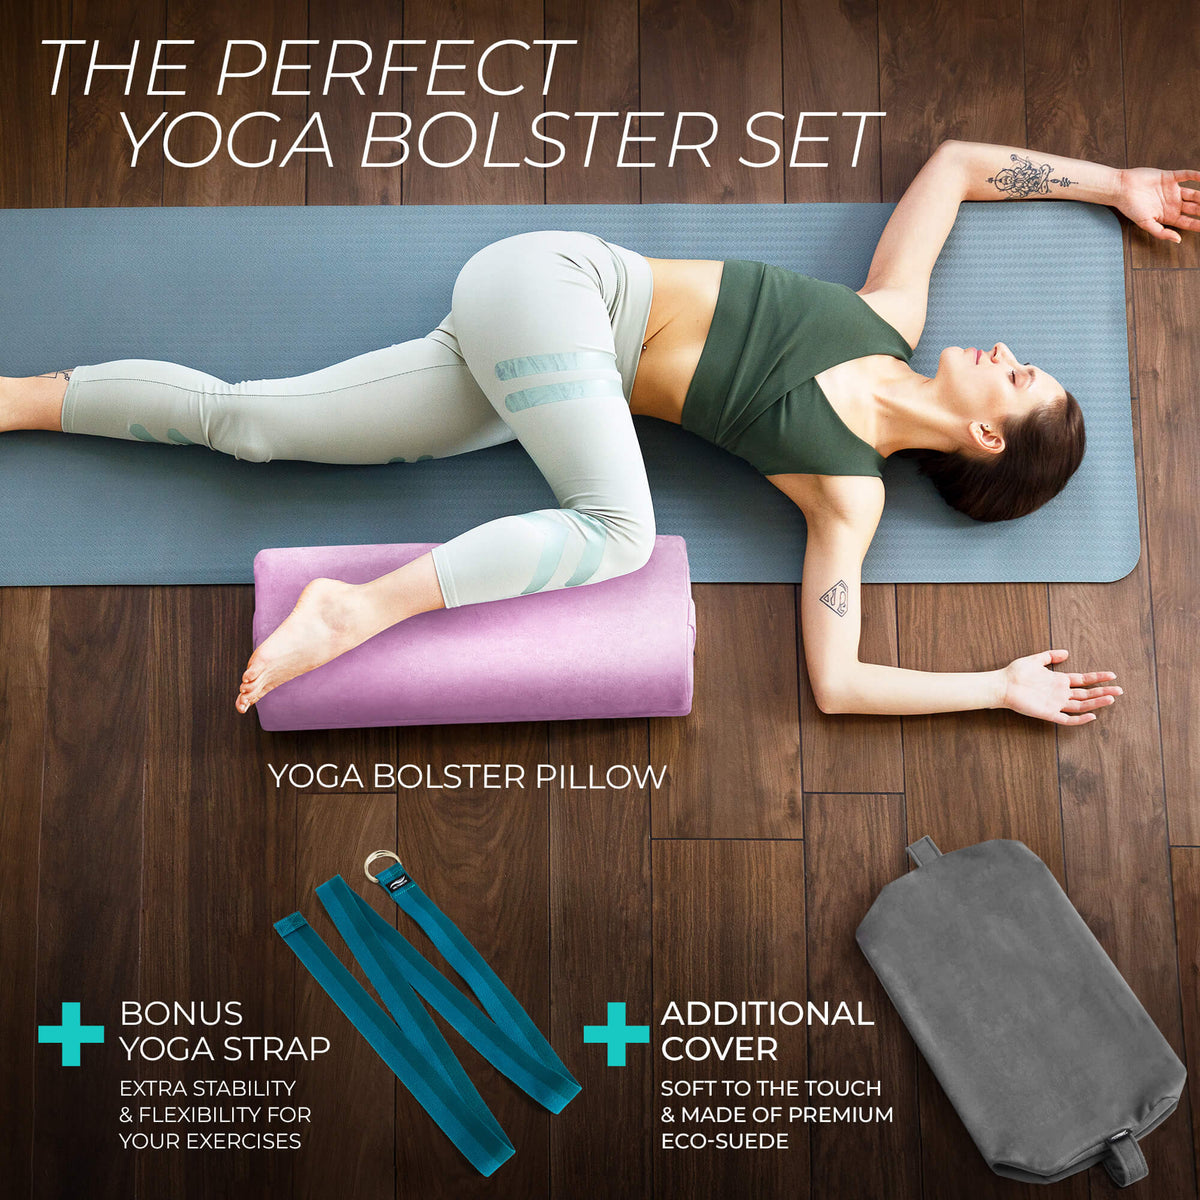 Yoga Bolster: Improve Your Yoga Practice